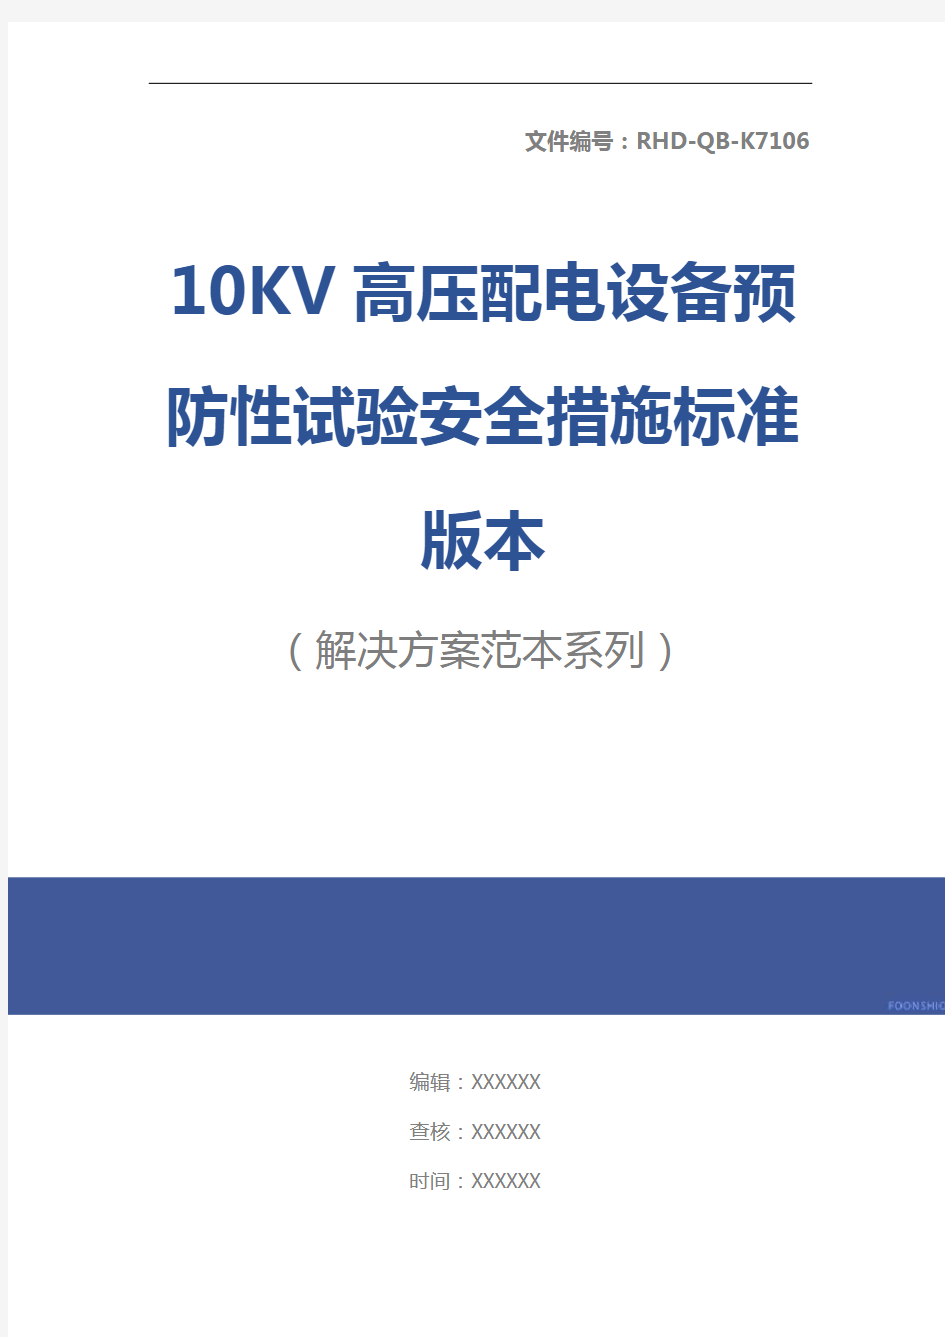 10KV高压配电设备预防性试验安全措施标准版本